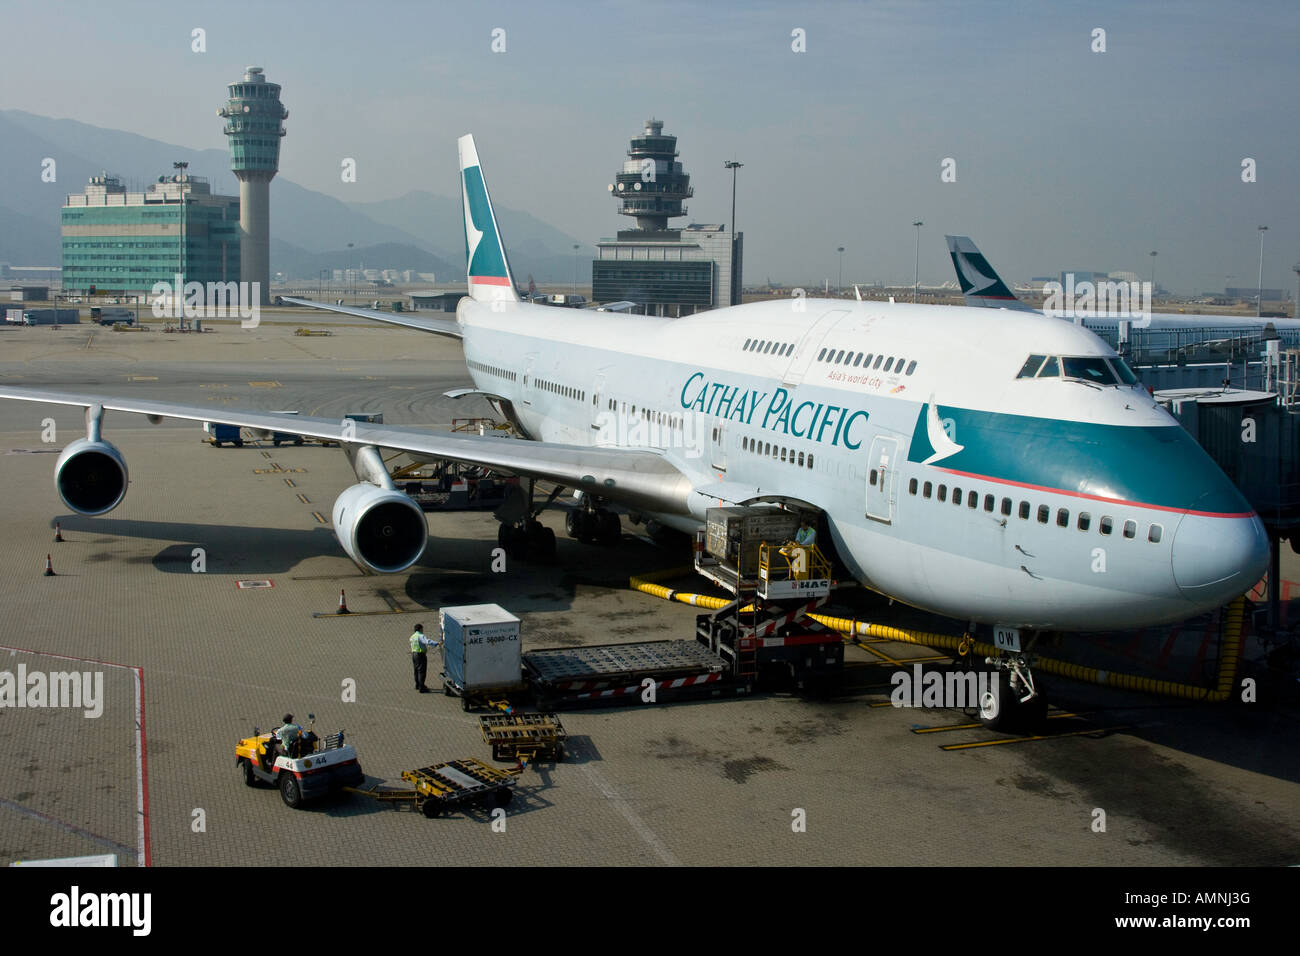 Loading Cargo into a Cathay Pacific Passenger Plane HKG Hong Kong International Airport Stock Photo